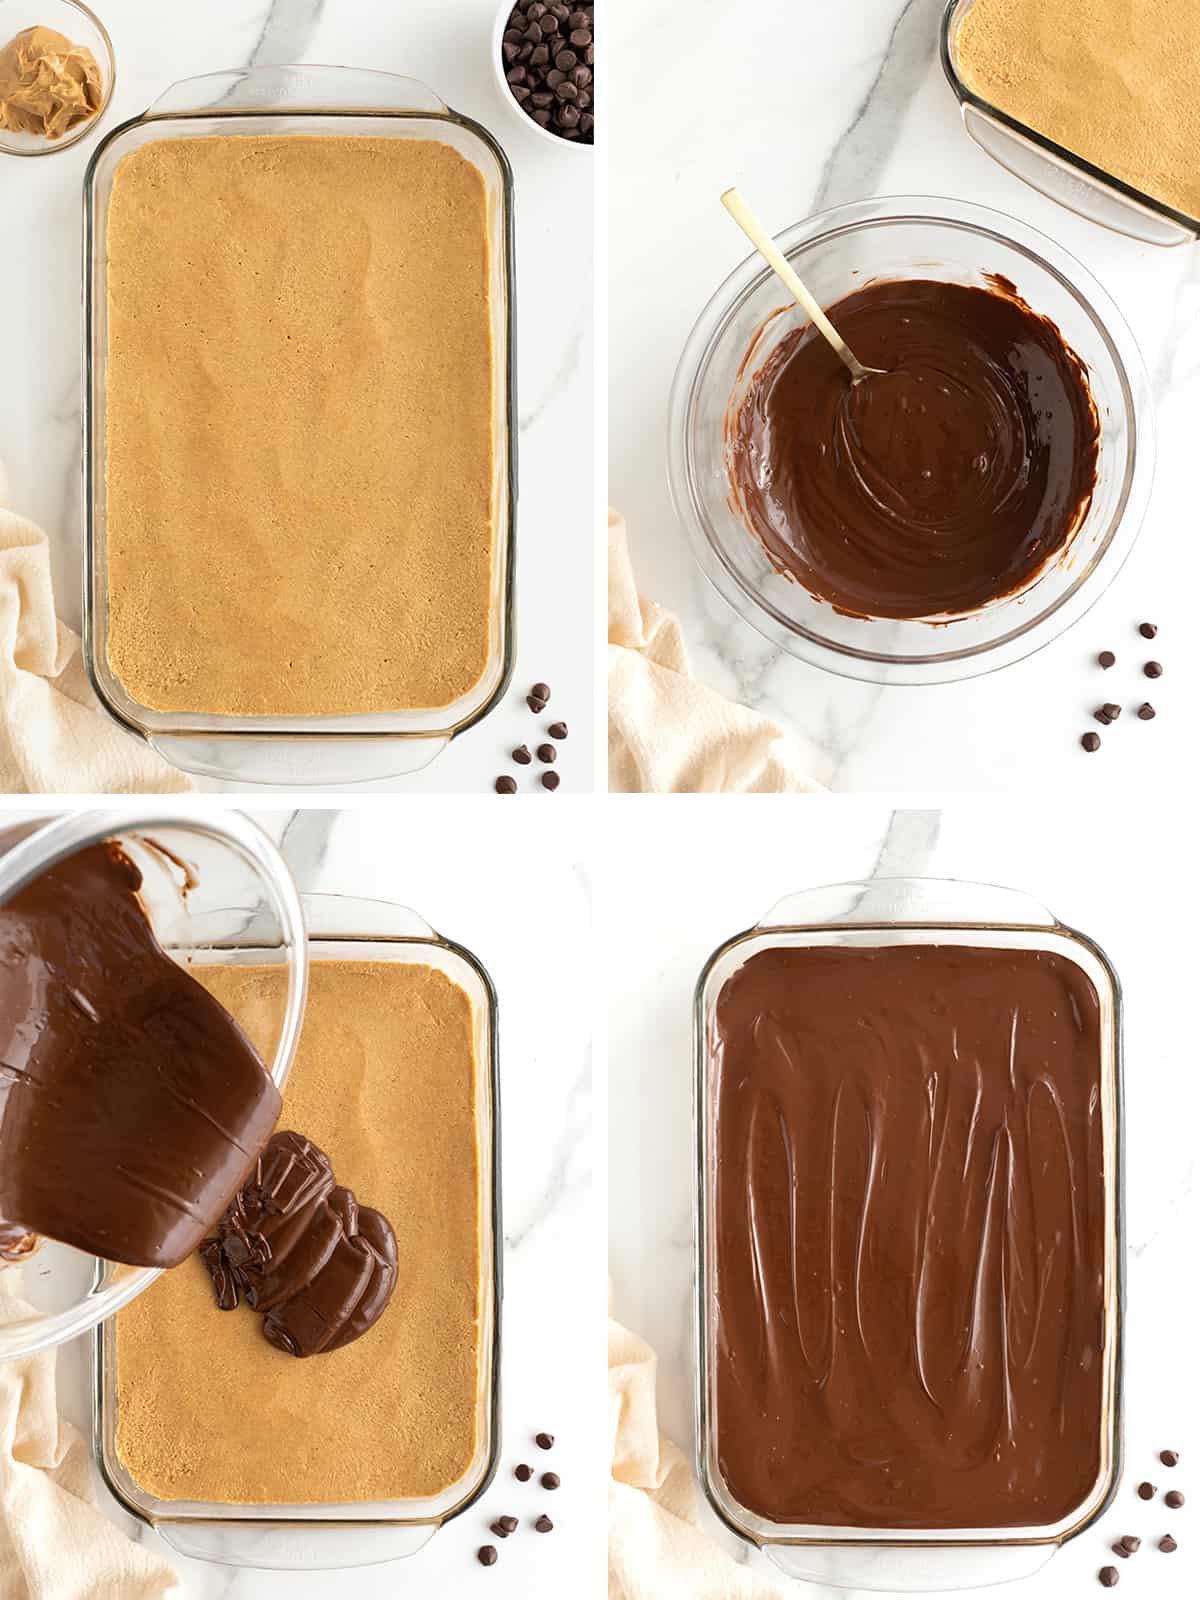 Steps to make No-Bake Chocolate Peanut Butter Bars.